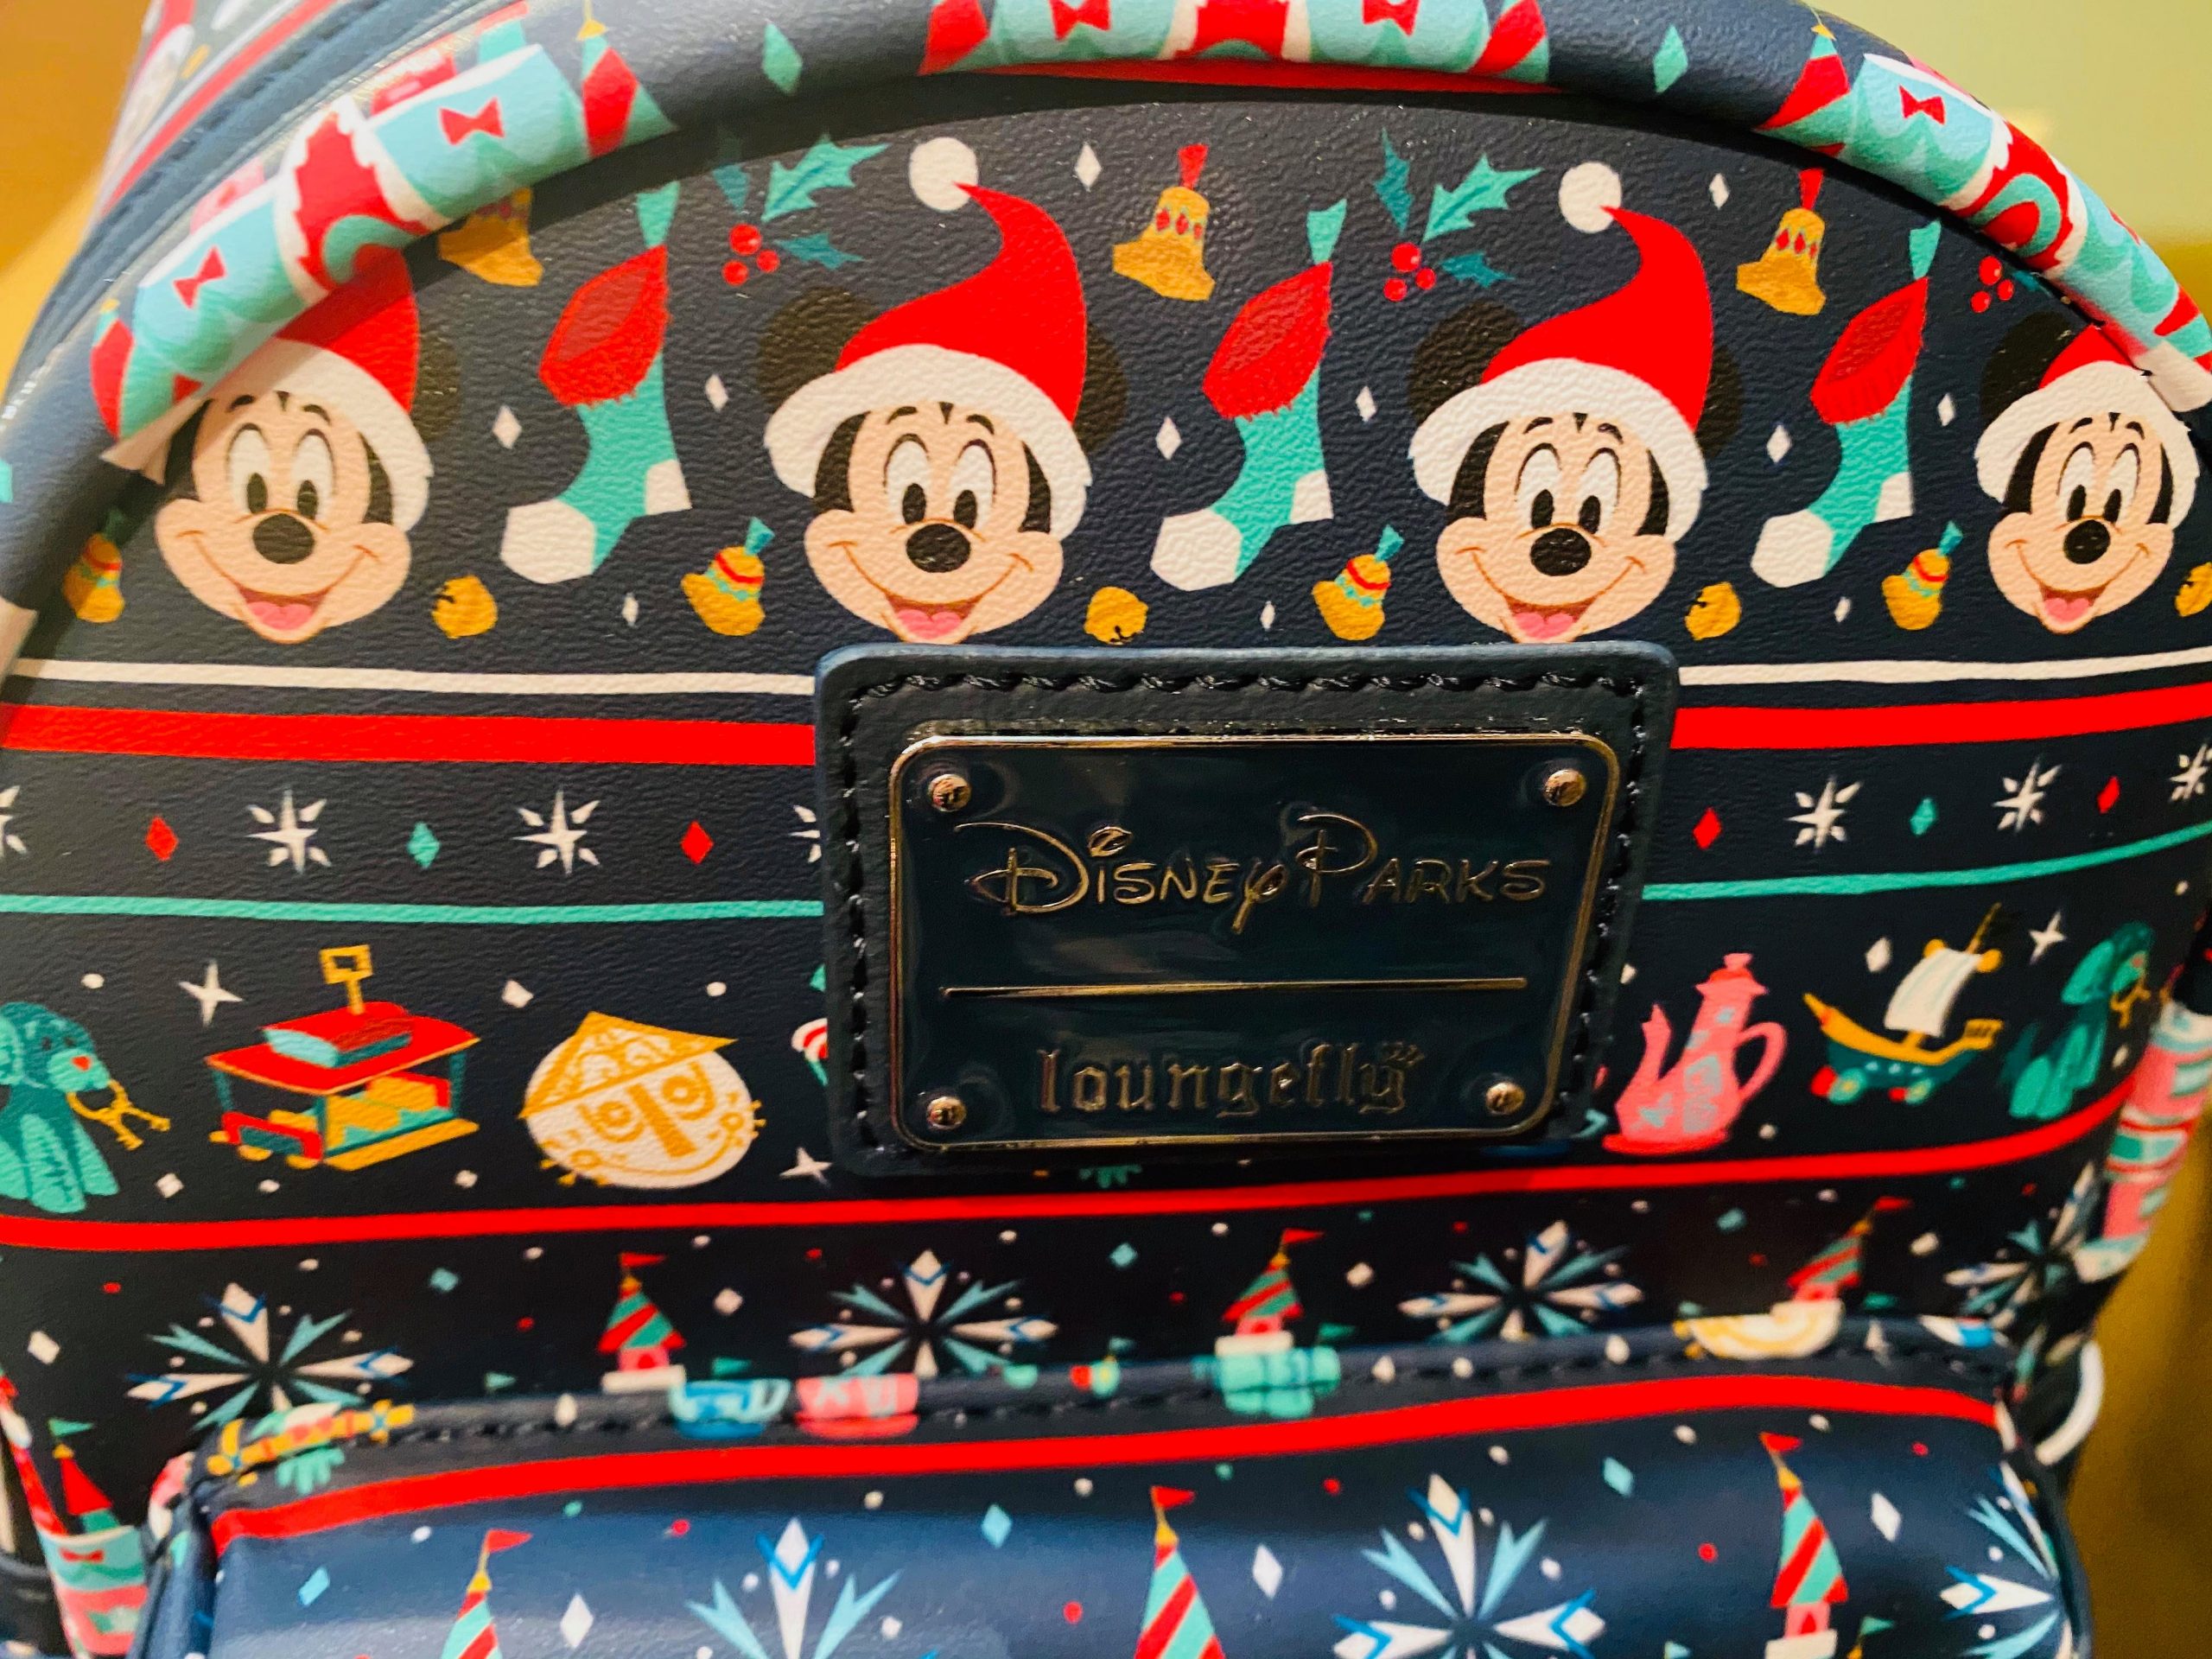 Festive Christmas Disney Loungefly is on our list! Disney Fashion Blog